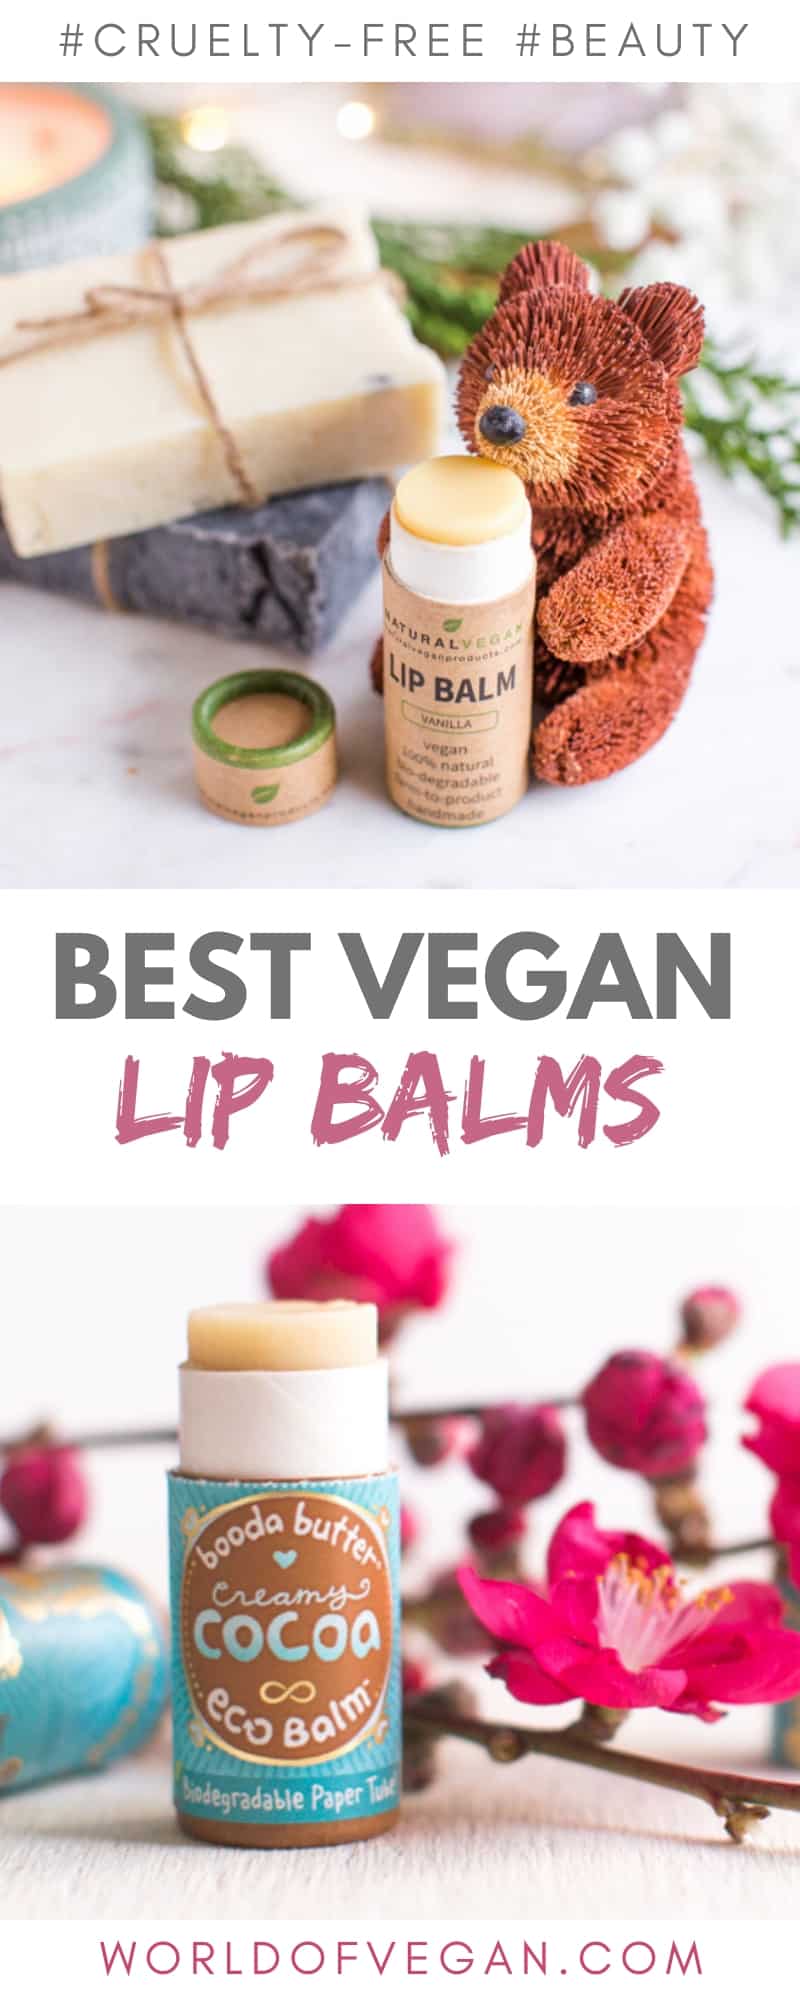 Guide to Vegan Lip Balms | World of Vegan | #beauty #crueltyfree #vegan #guide #products #worldofvegan